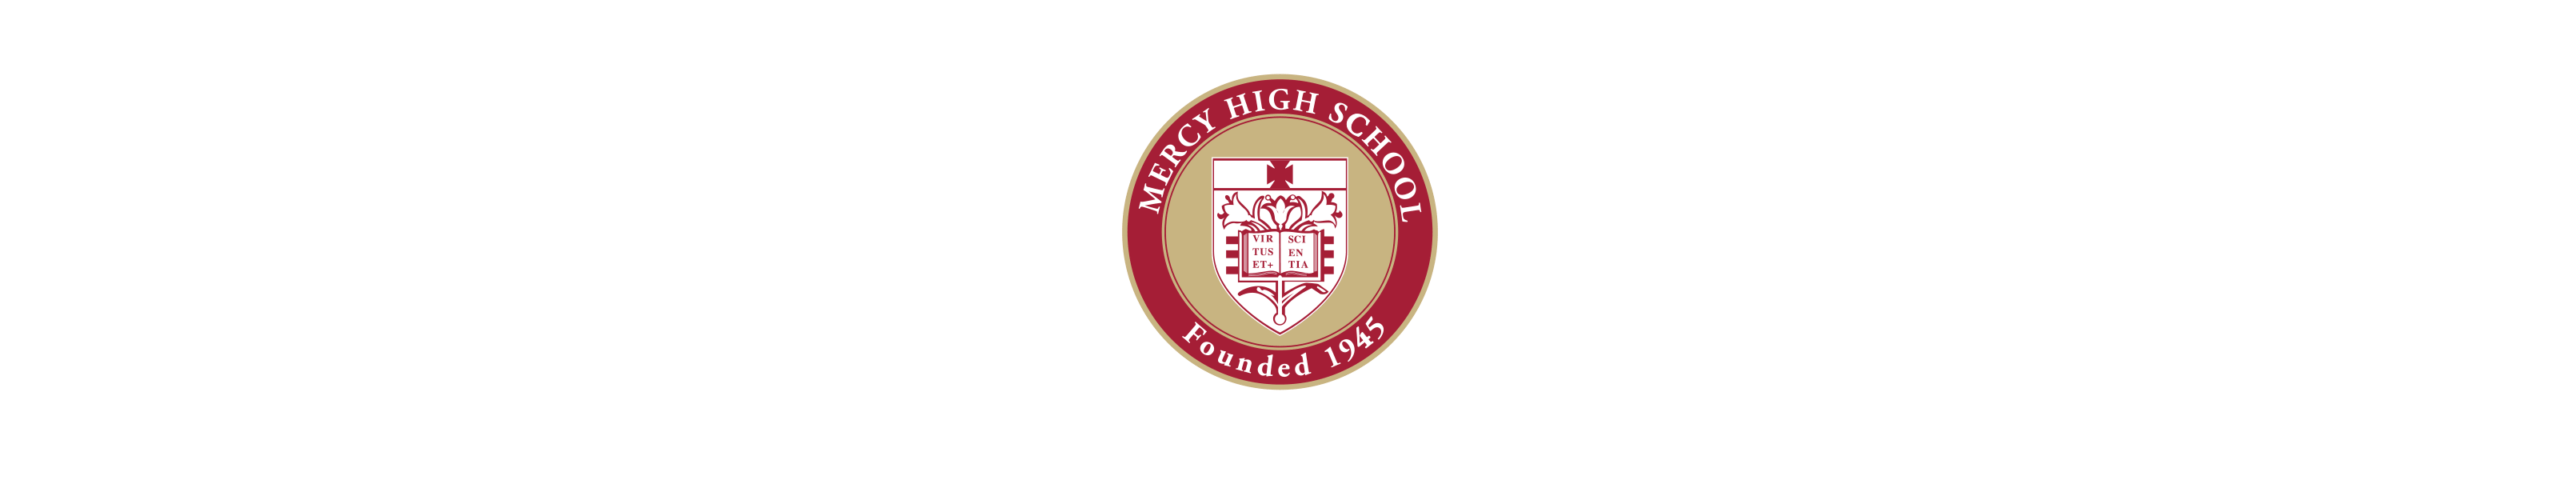 Mercy High School corporate logo